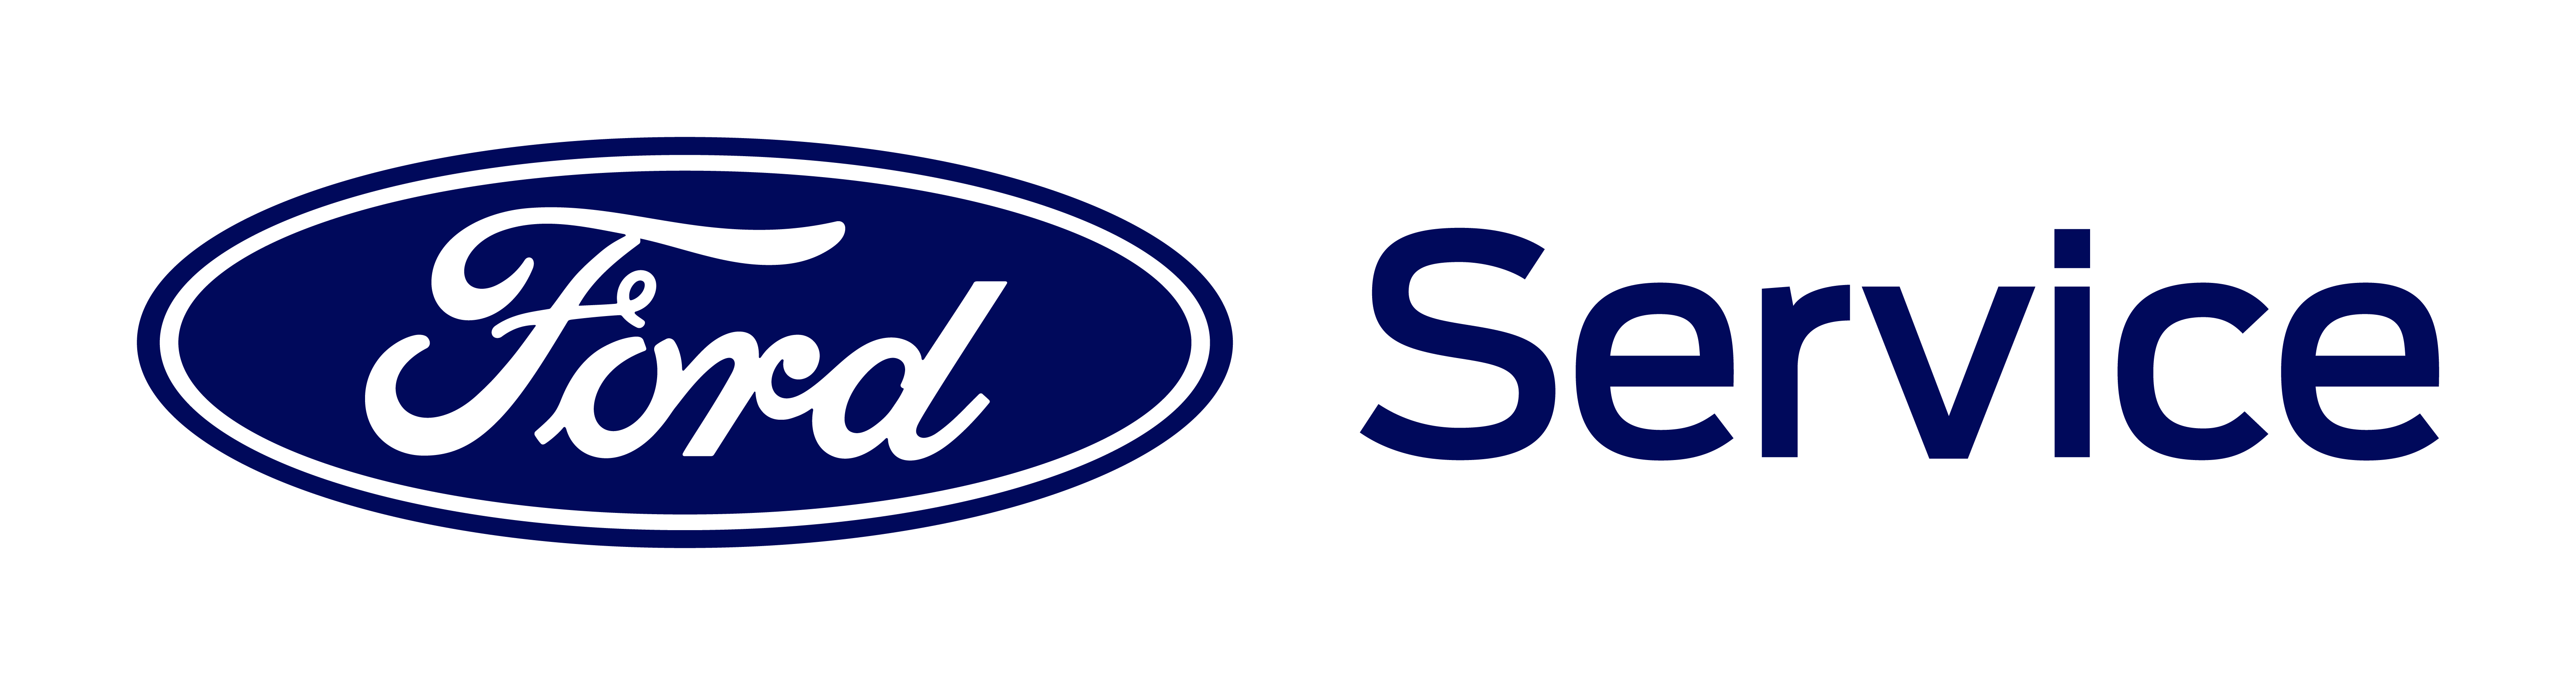 Logo Ford Service